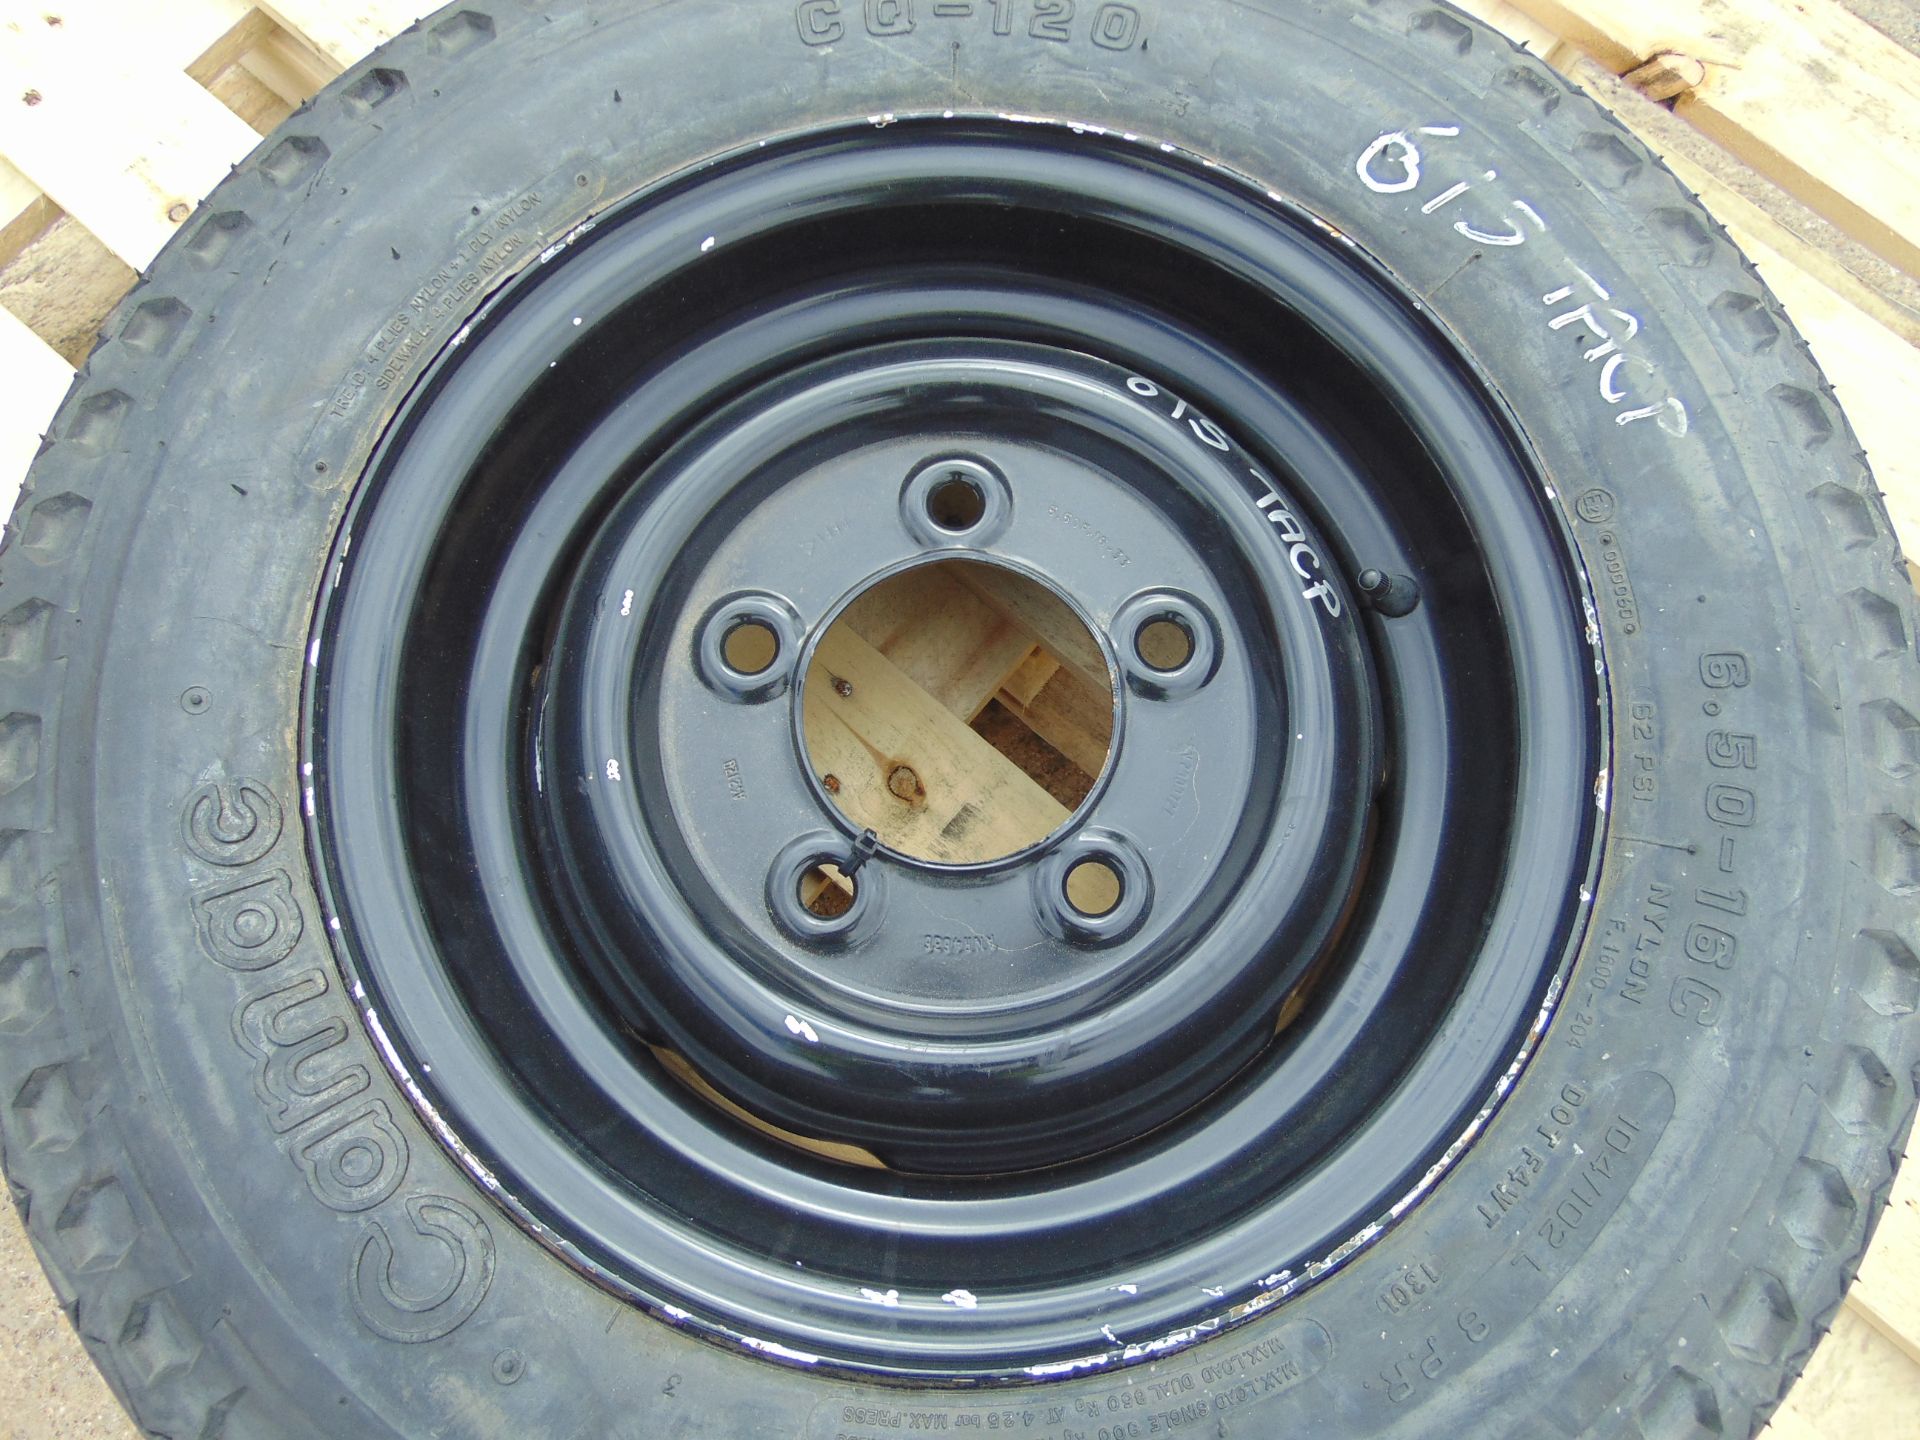 Camac 6.50-16C Tyre with 5 Stud Rim - Image 5 of 6